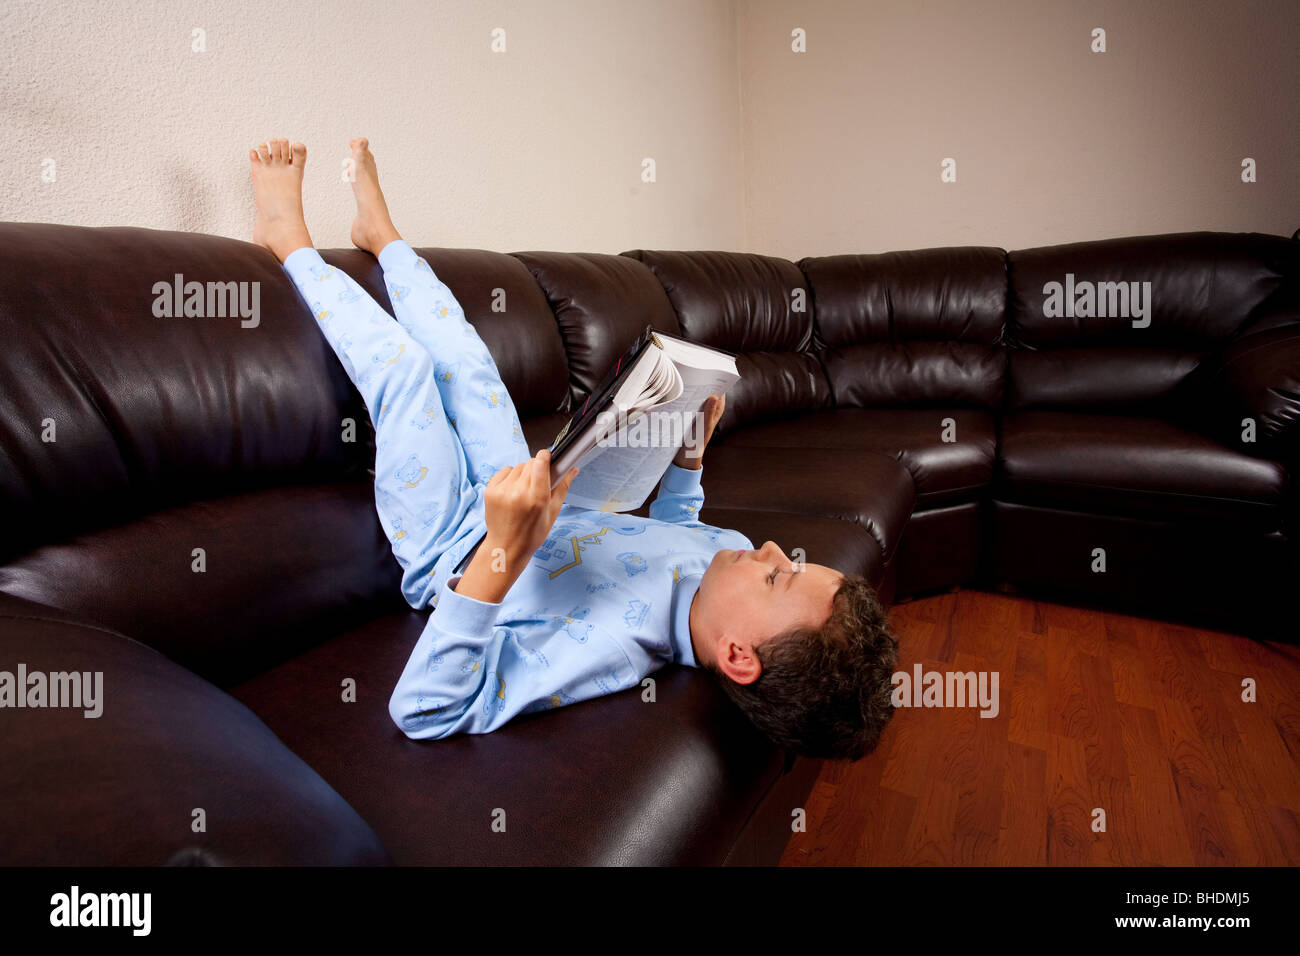 Мужчина вверх ногами. На диване вверх ногами. Человек лежит на диване. Лежать на диване вверх ногами.